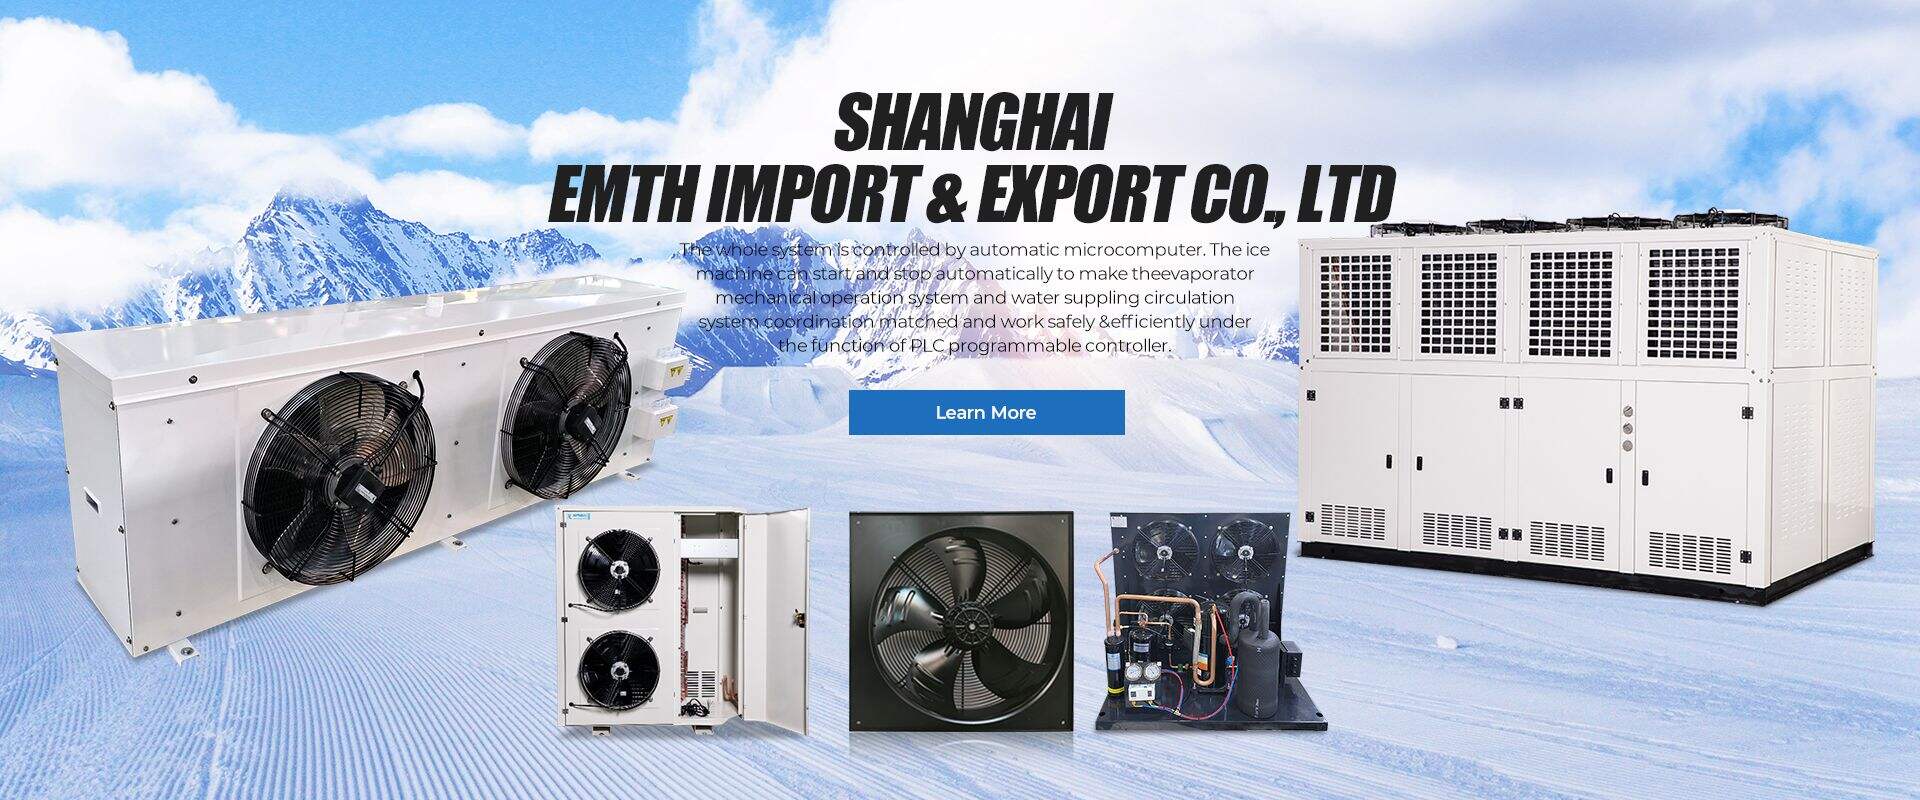 I-Shanghai EMTH Import & Export Co, LTD